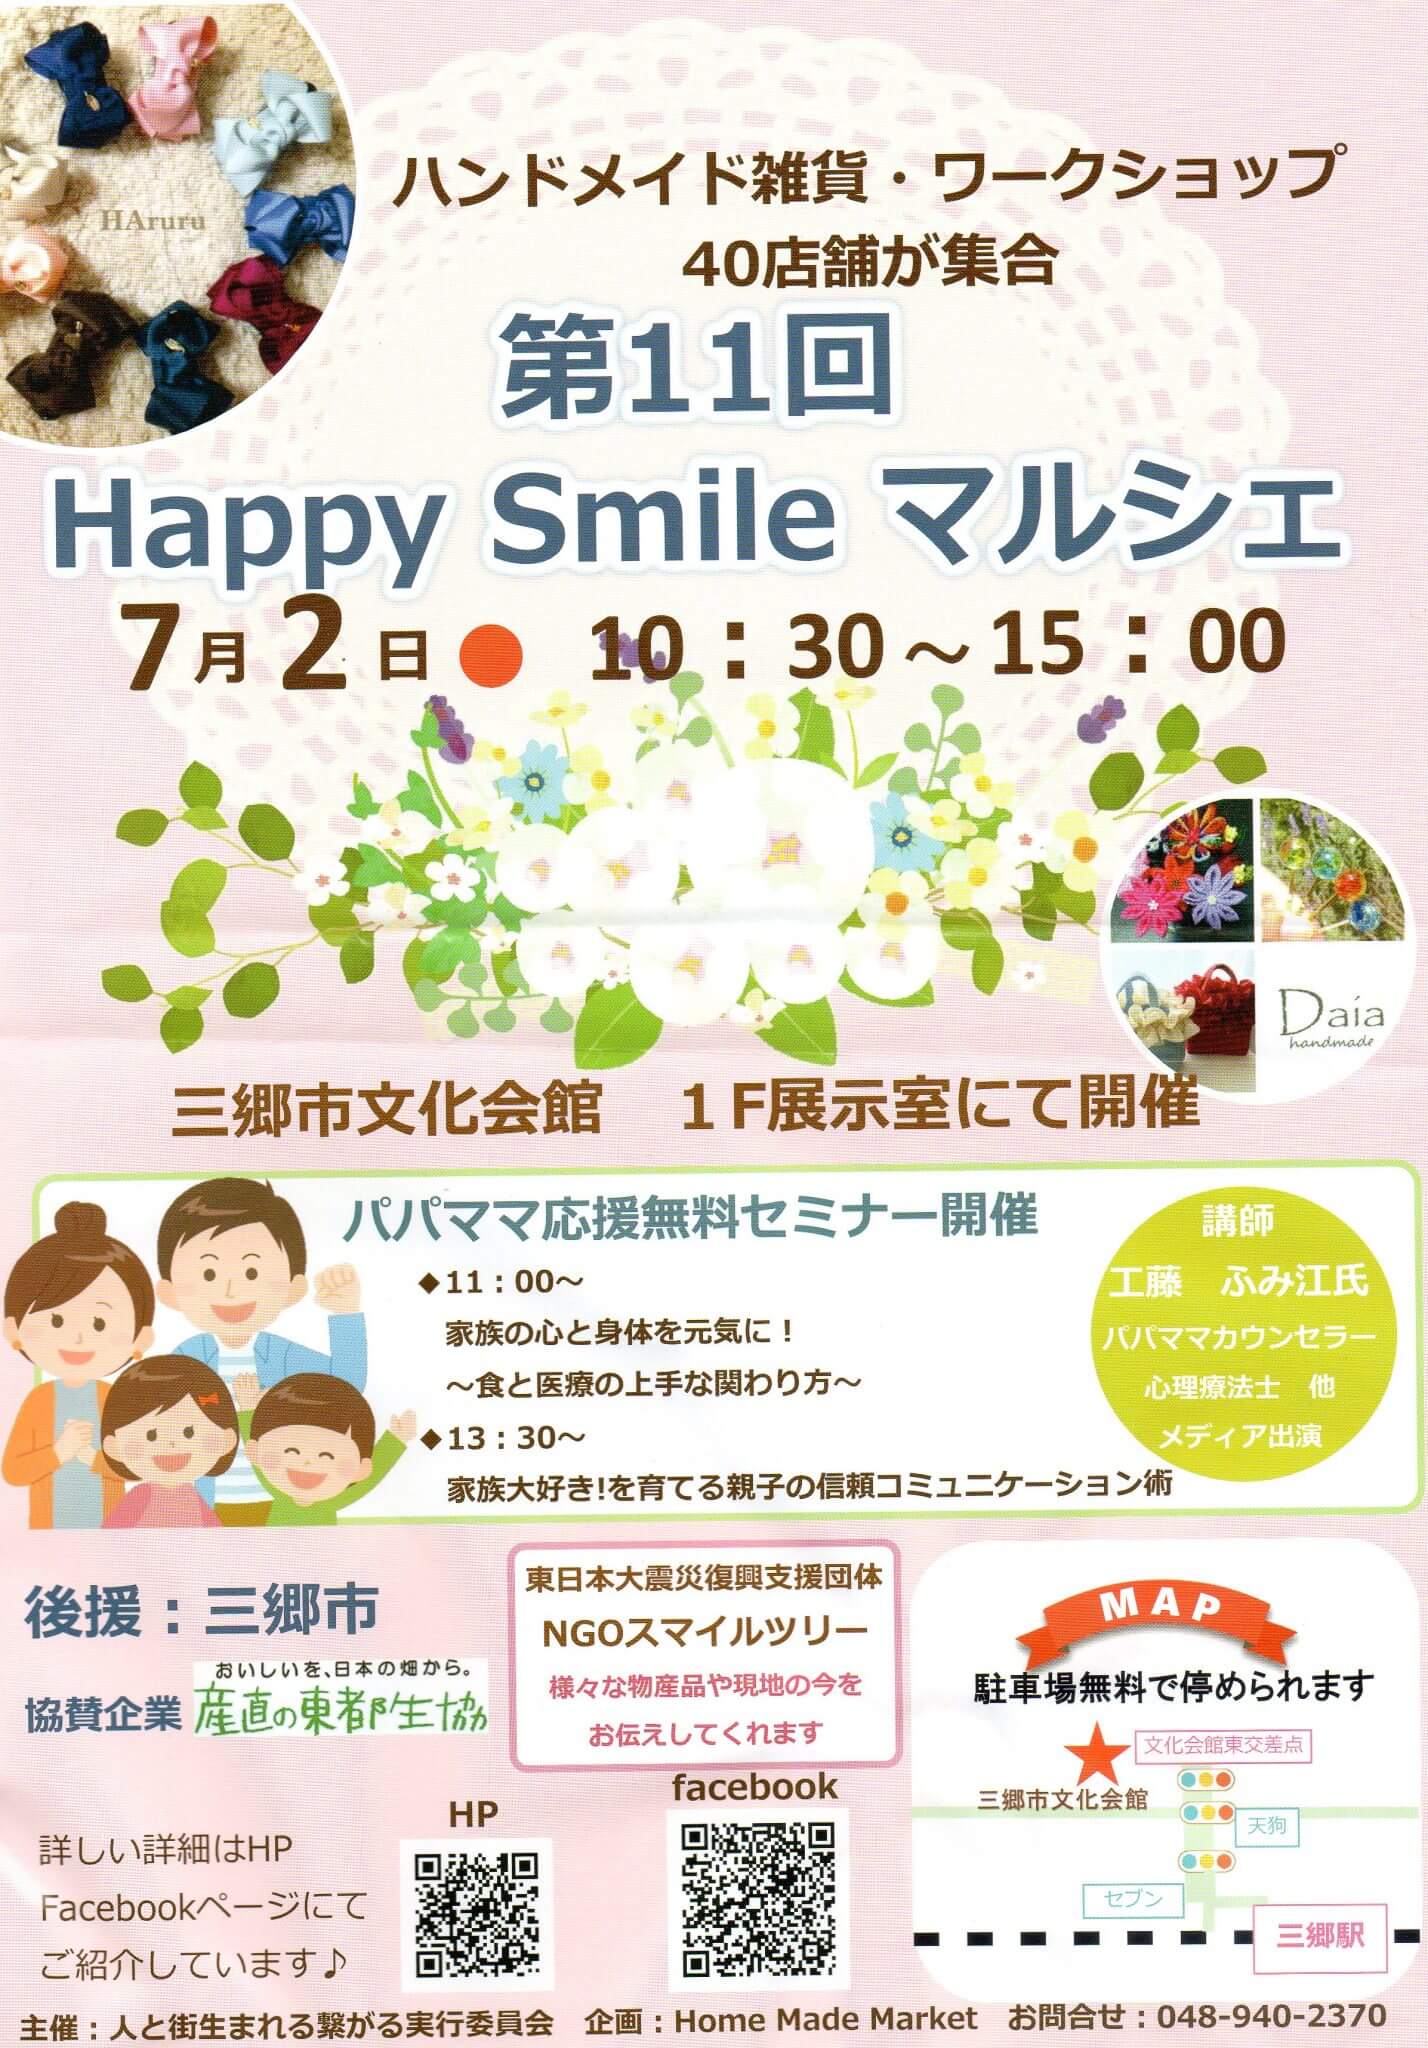 Happy Smile マルシェが7月2日に三郷市文化会館で開催されます